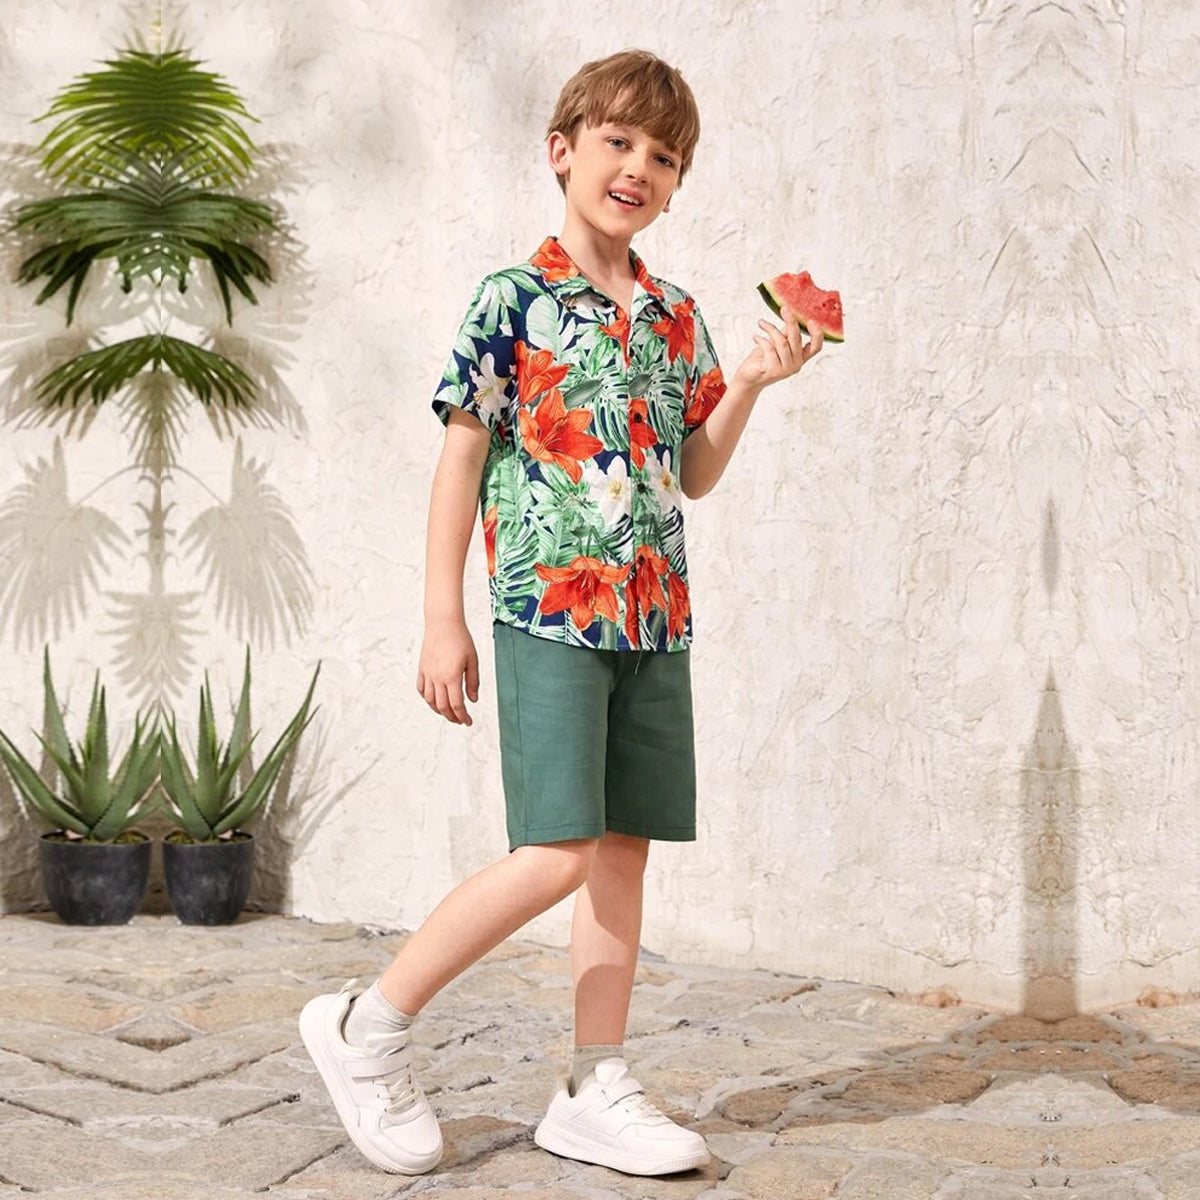 VENUTALOZA Sunshne Floral 1pc Tropical Print Shirt For Boys.